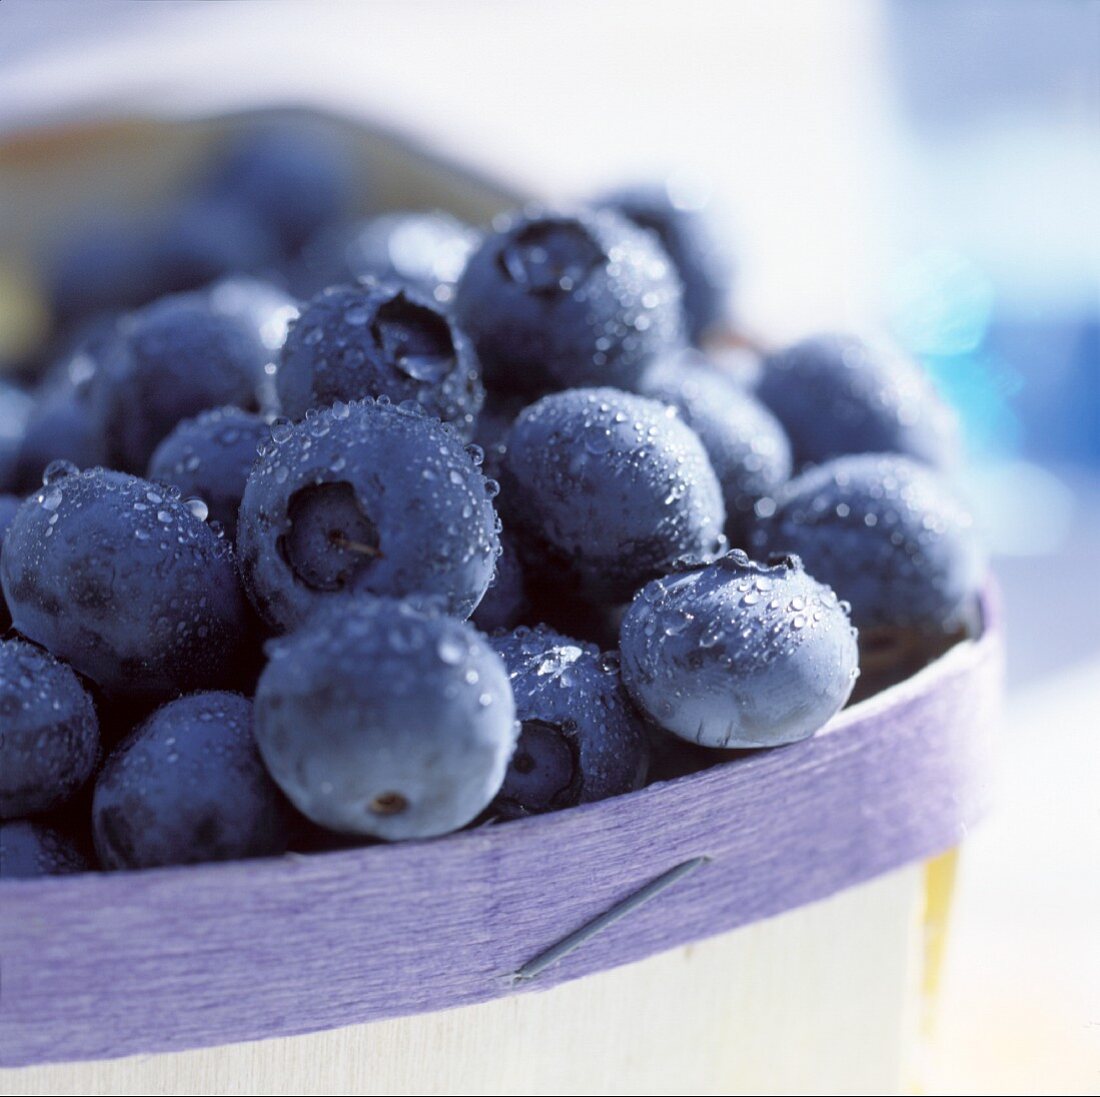 Fresh blueberries in a punnet